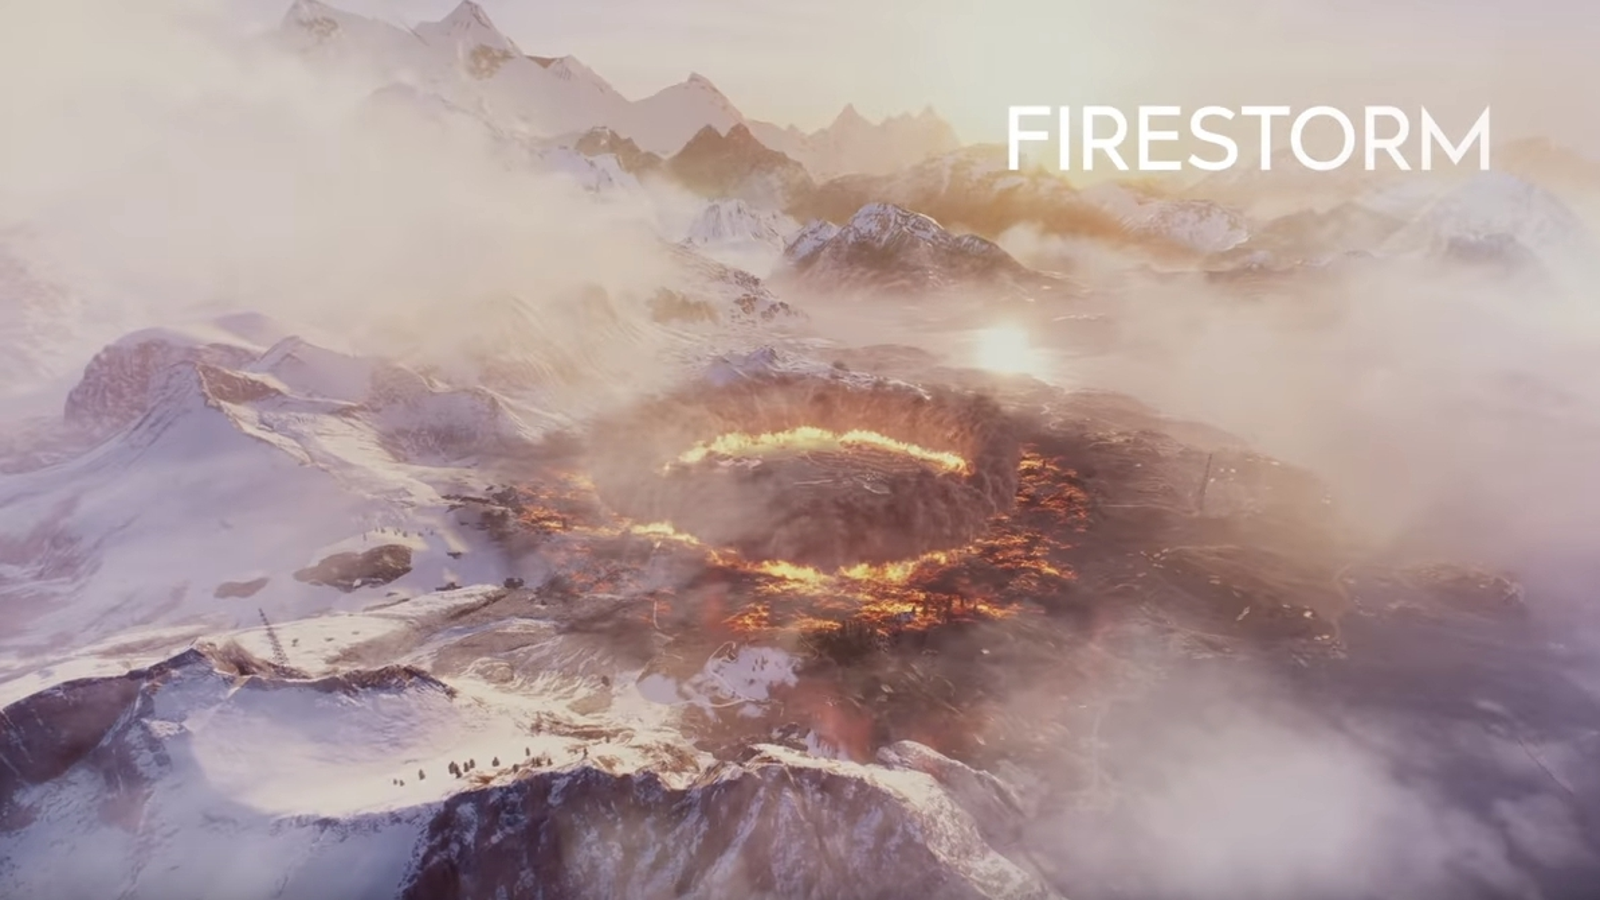 Battlefield 5's New Fortnite-Inspired 'Firestorm' Mode Is Pretty Good